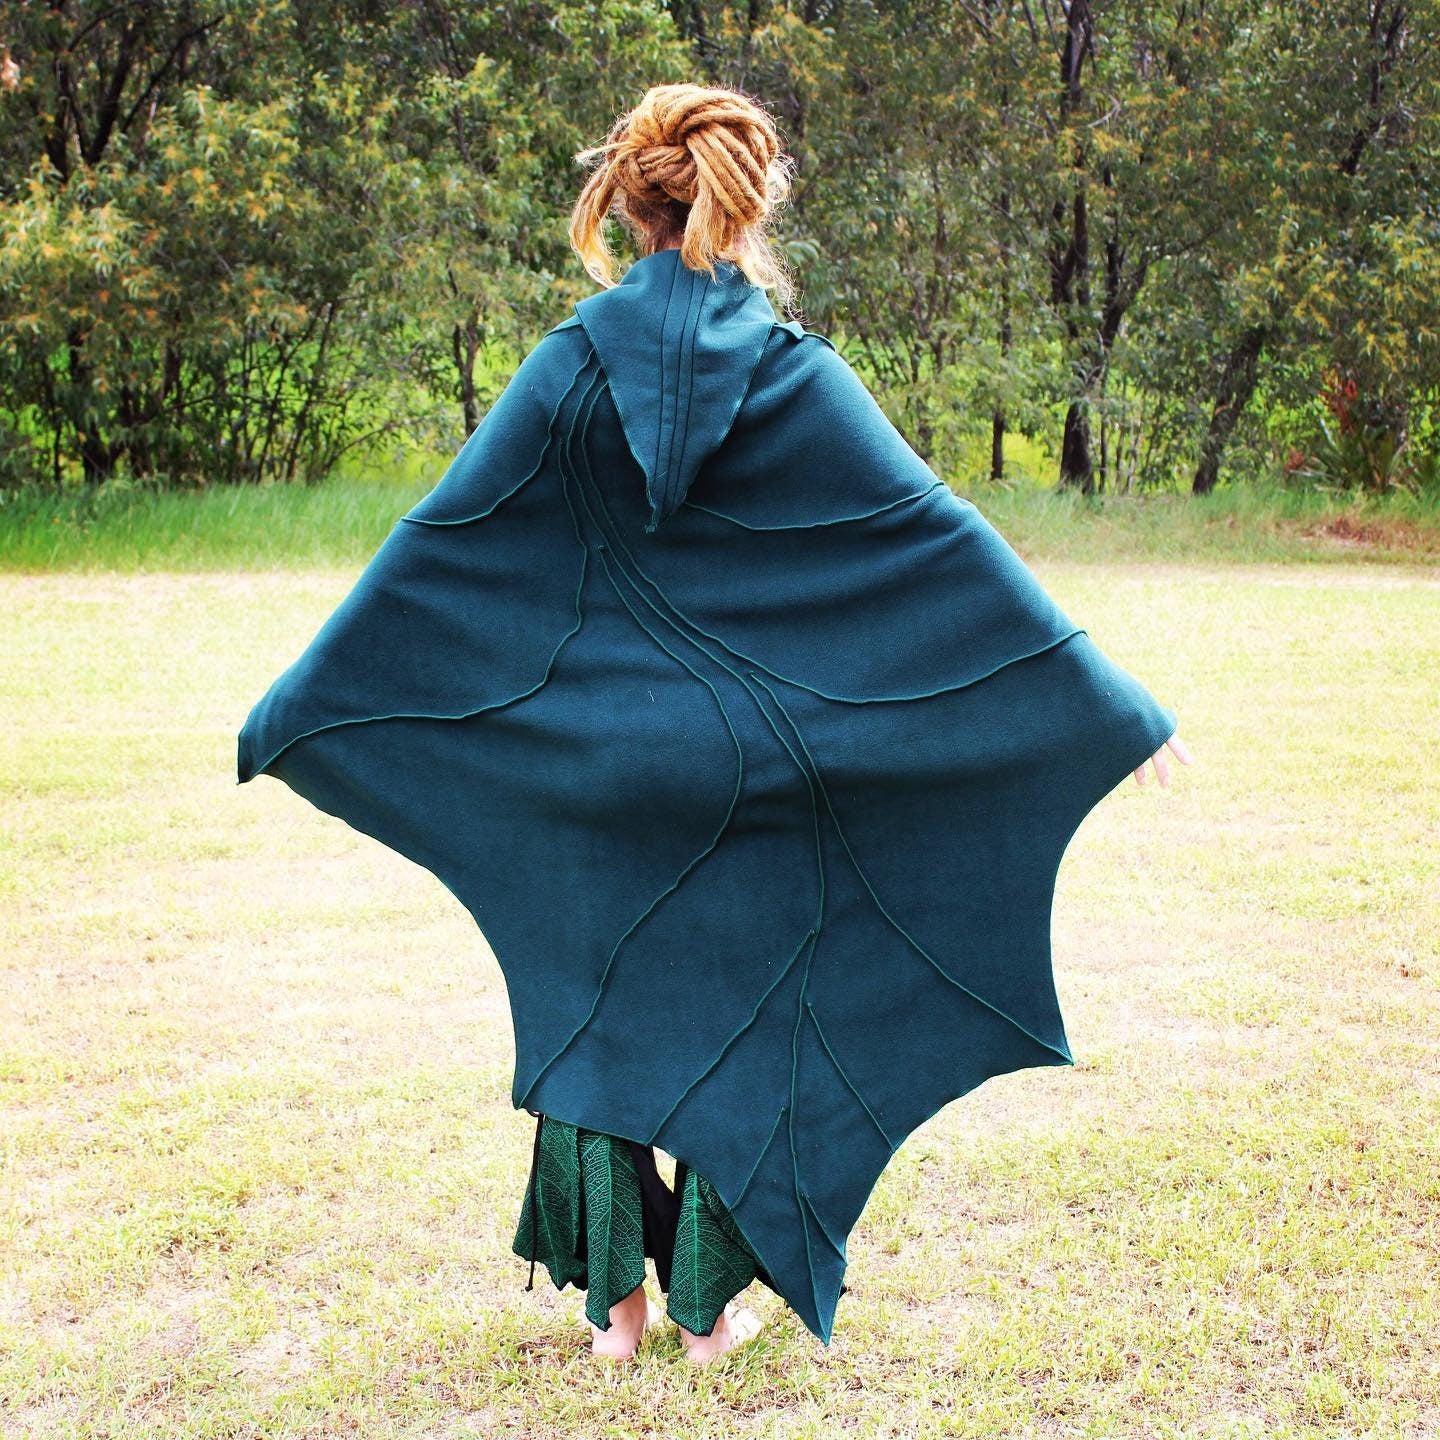 Bottle Green - Leaf Cape Poncho with Giant Pixie Hood - - cloak - cape